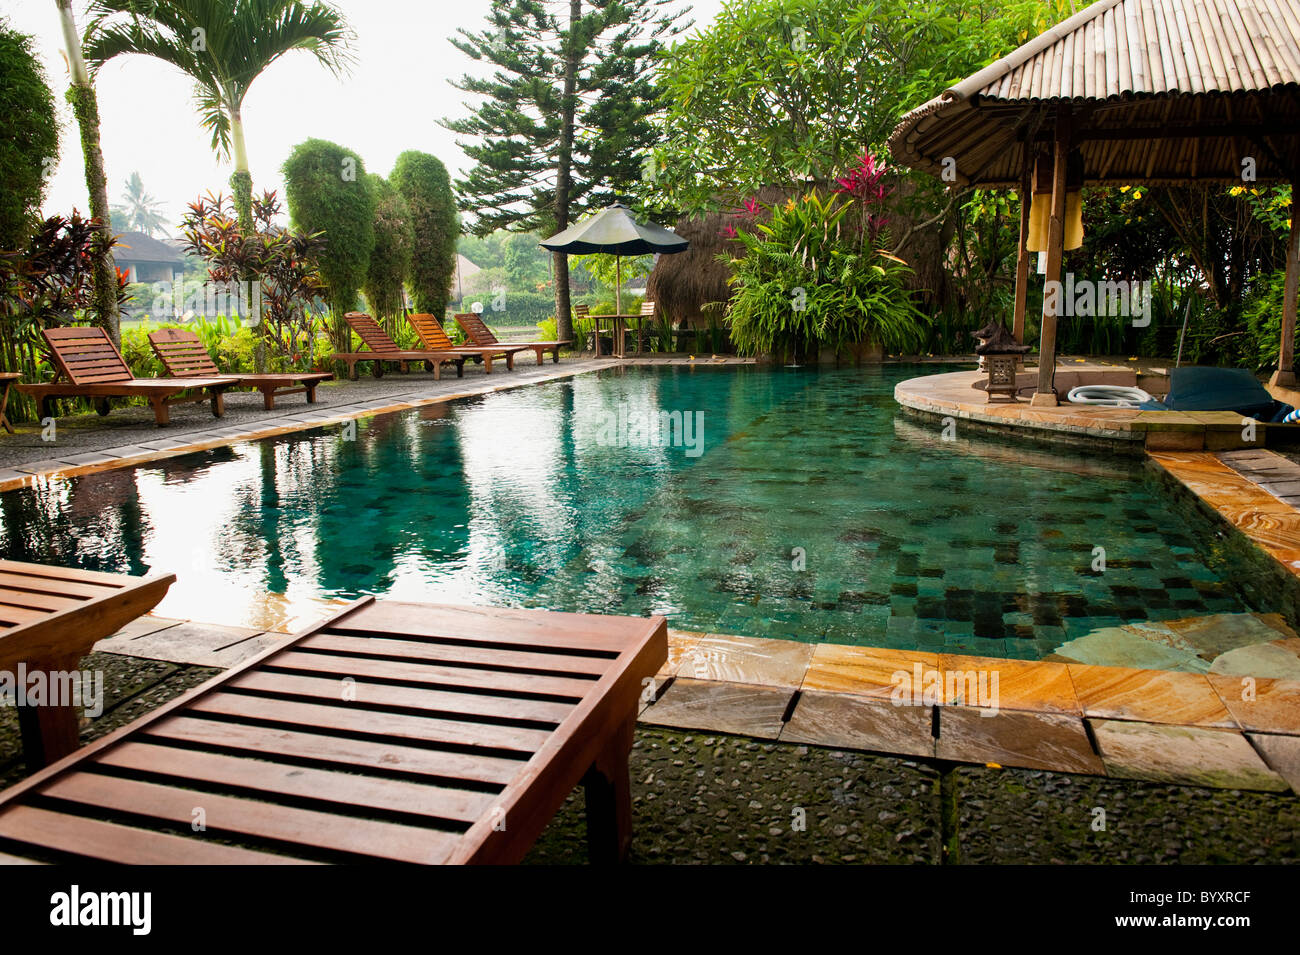 At the beautiful Tegal Sari Hotel in Ubud, Bali, the pool provides an